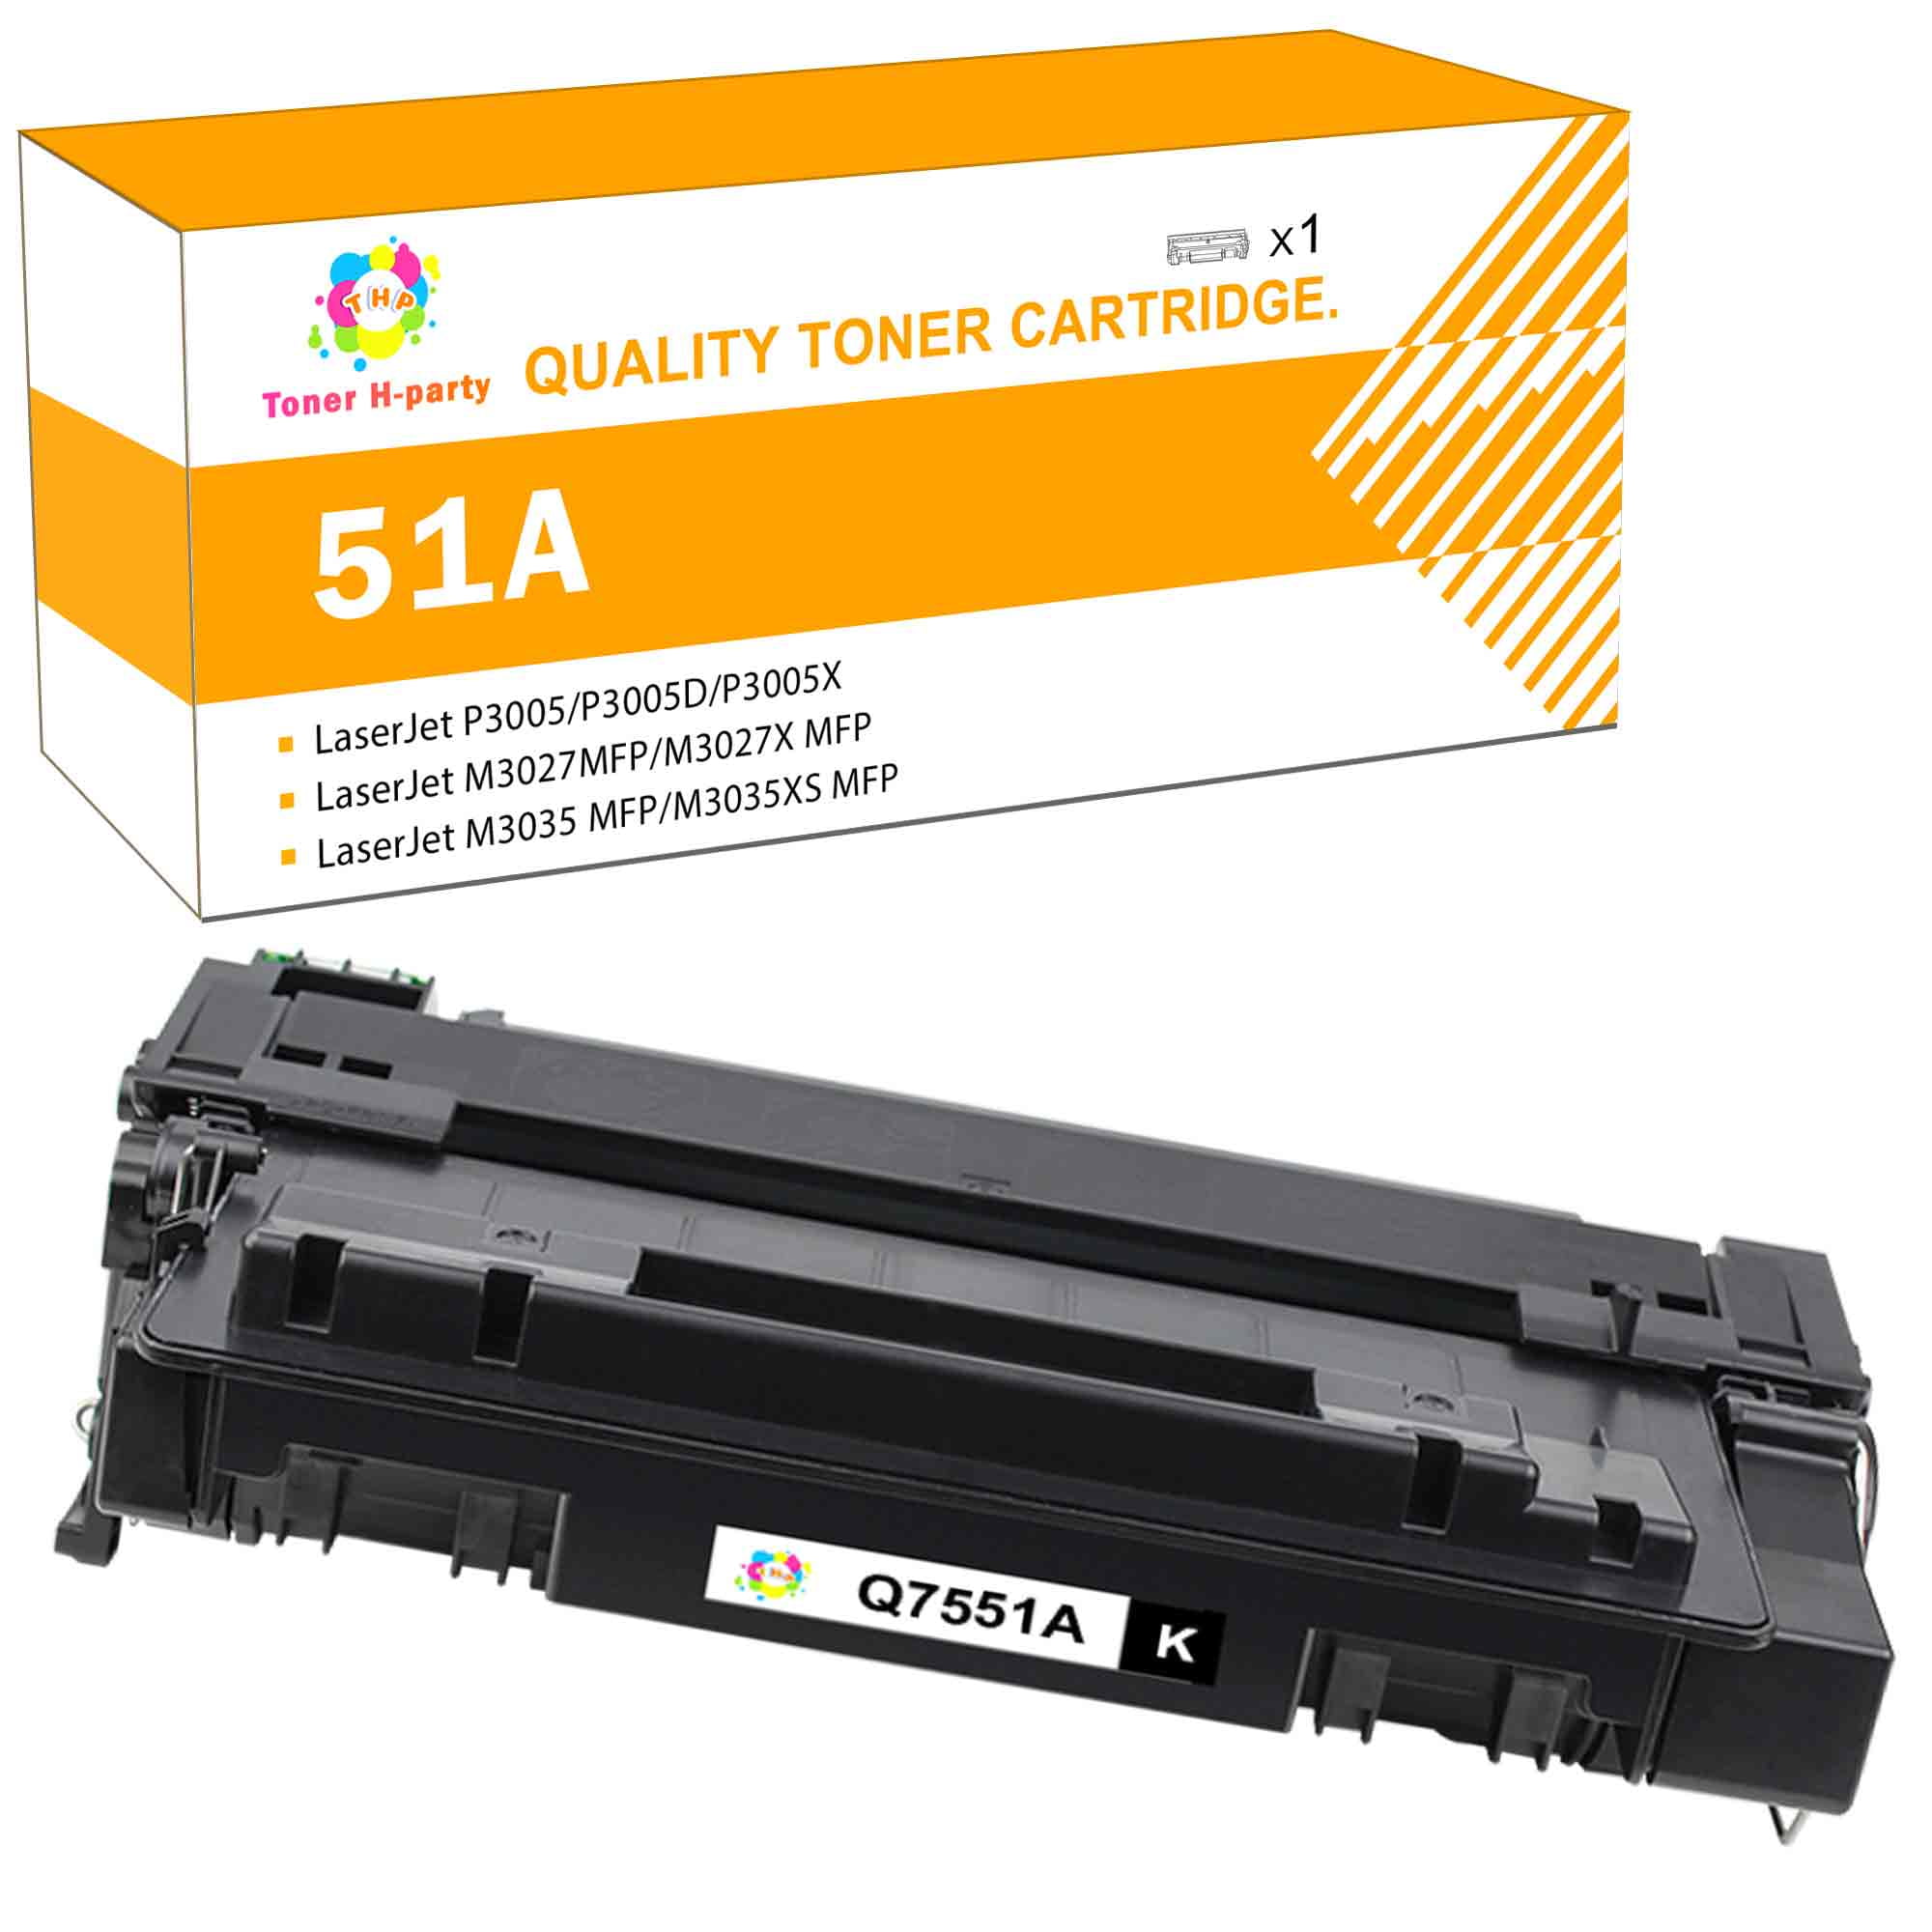 4PK Q7551A 51A Toner Cartridge For HP LaserJet P3005DN P3005X M3027 M3035 MFP 